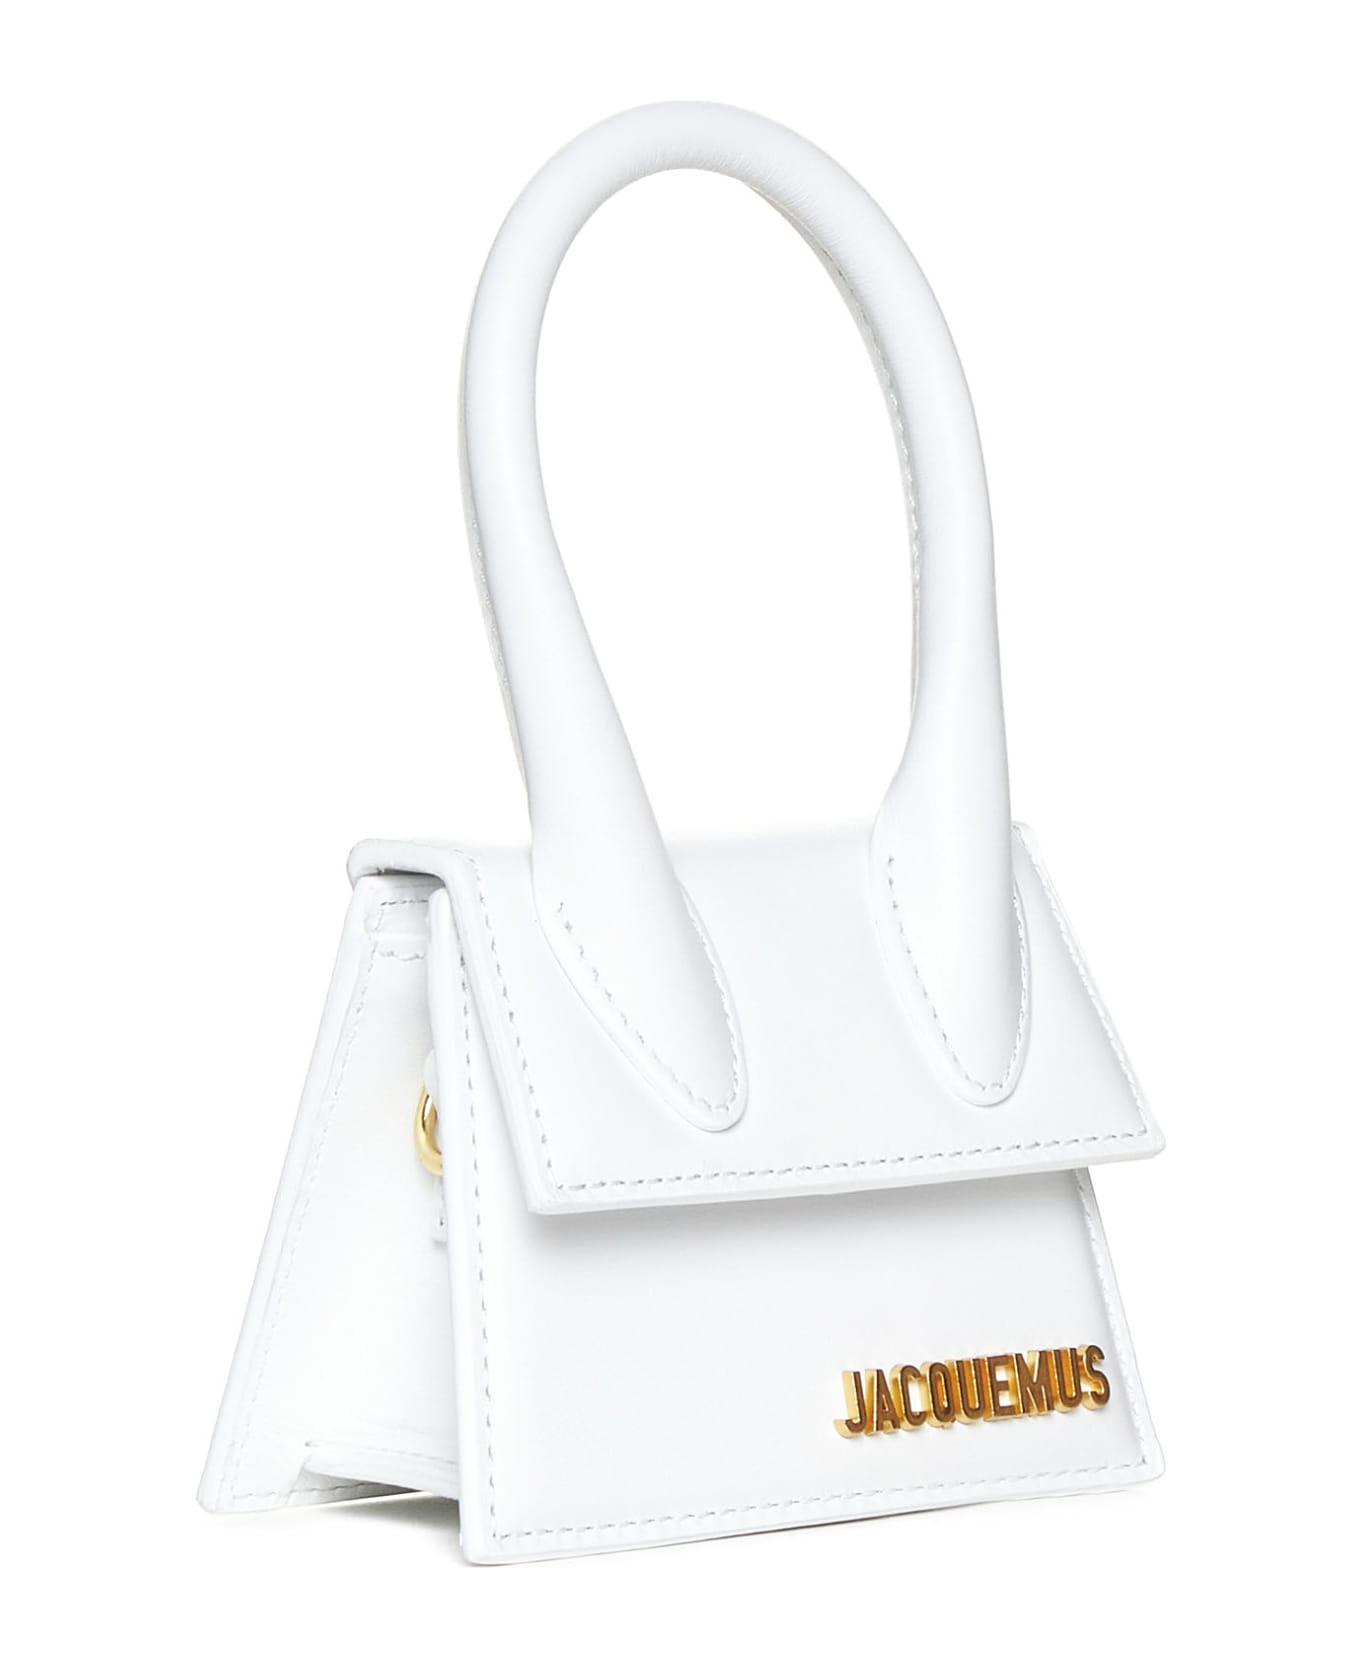 Jacquemus Le Chiquito Bag - White